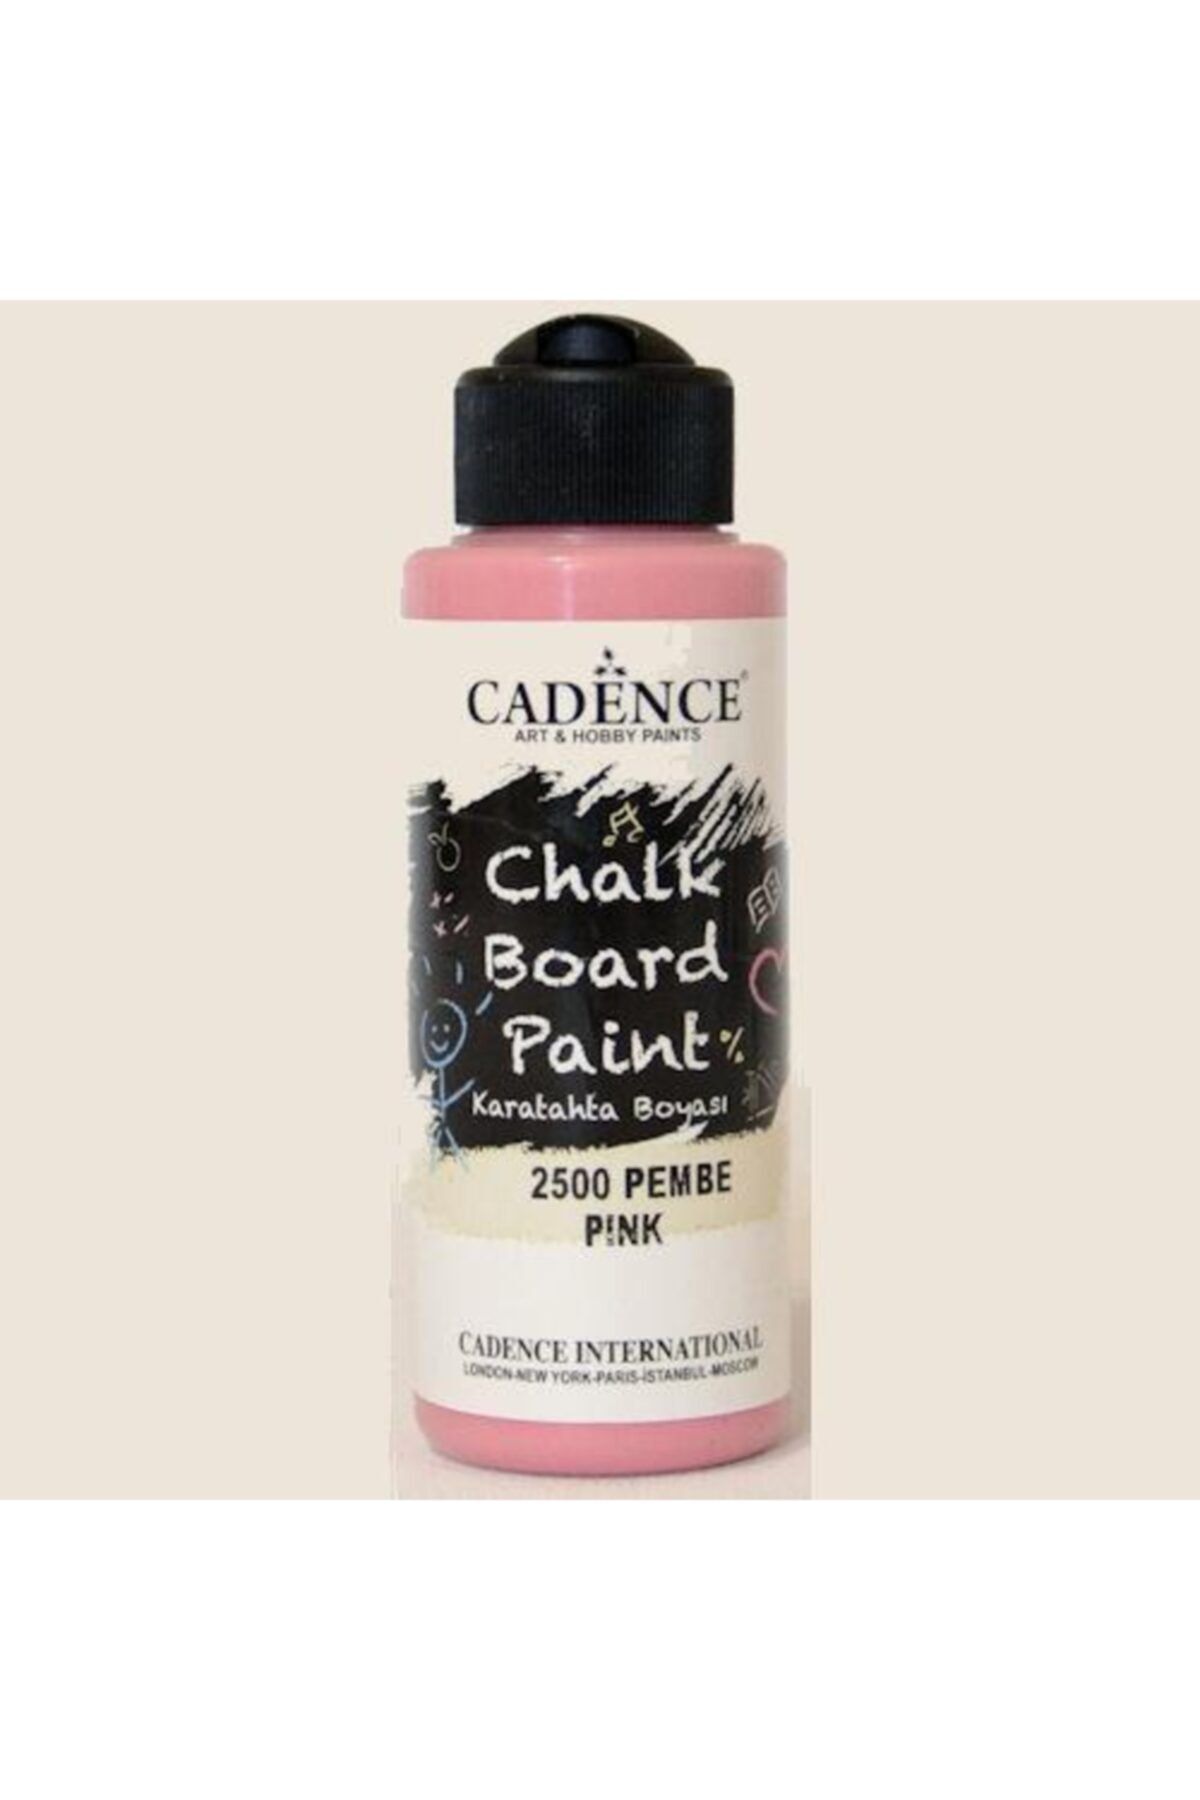 Cadence Chalkboard Paint 120ml Kara Tahta Boyası 2500 Pembe